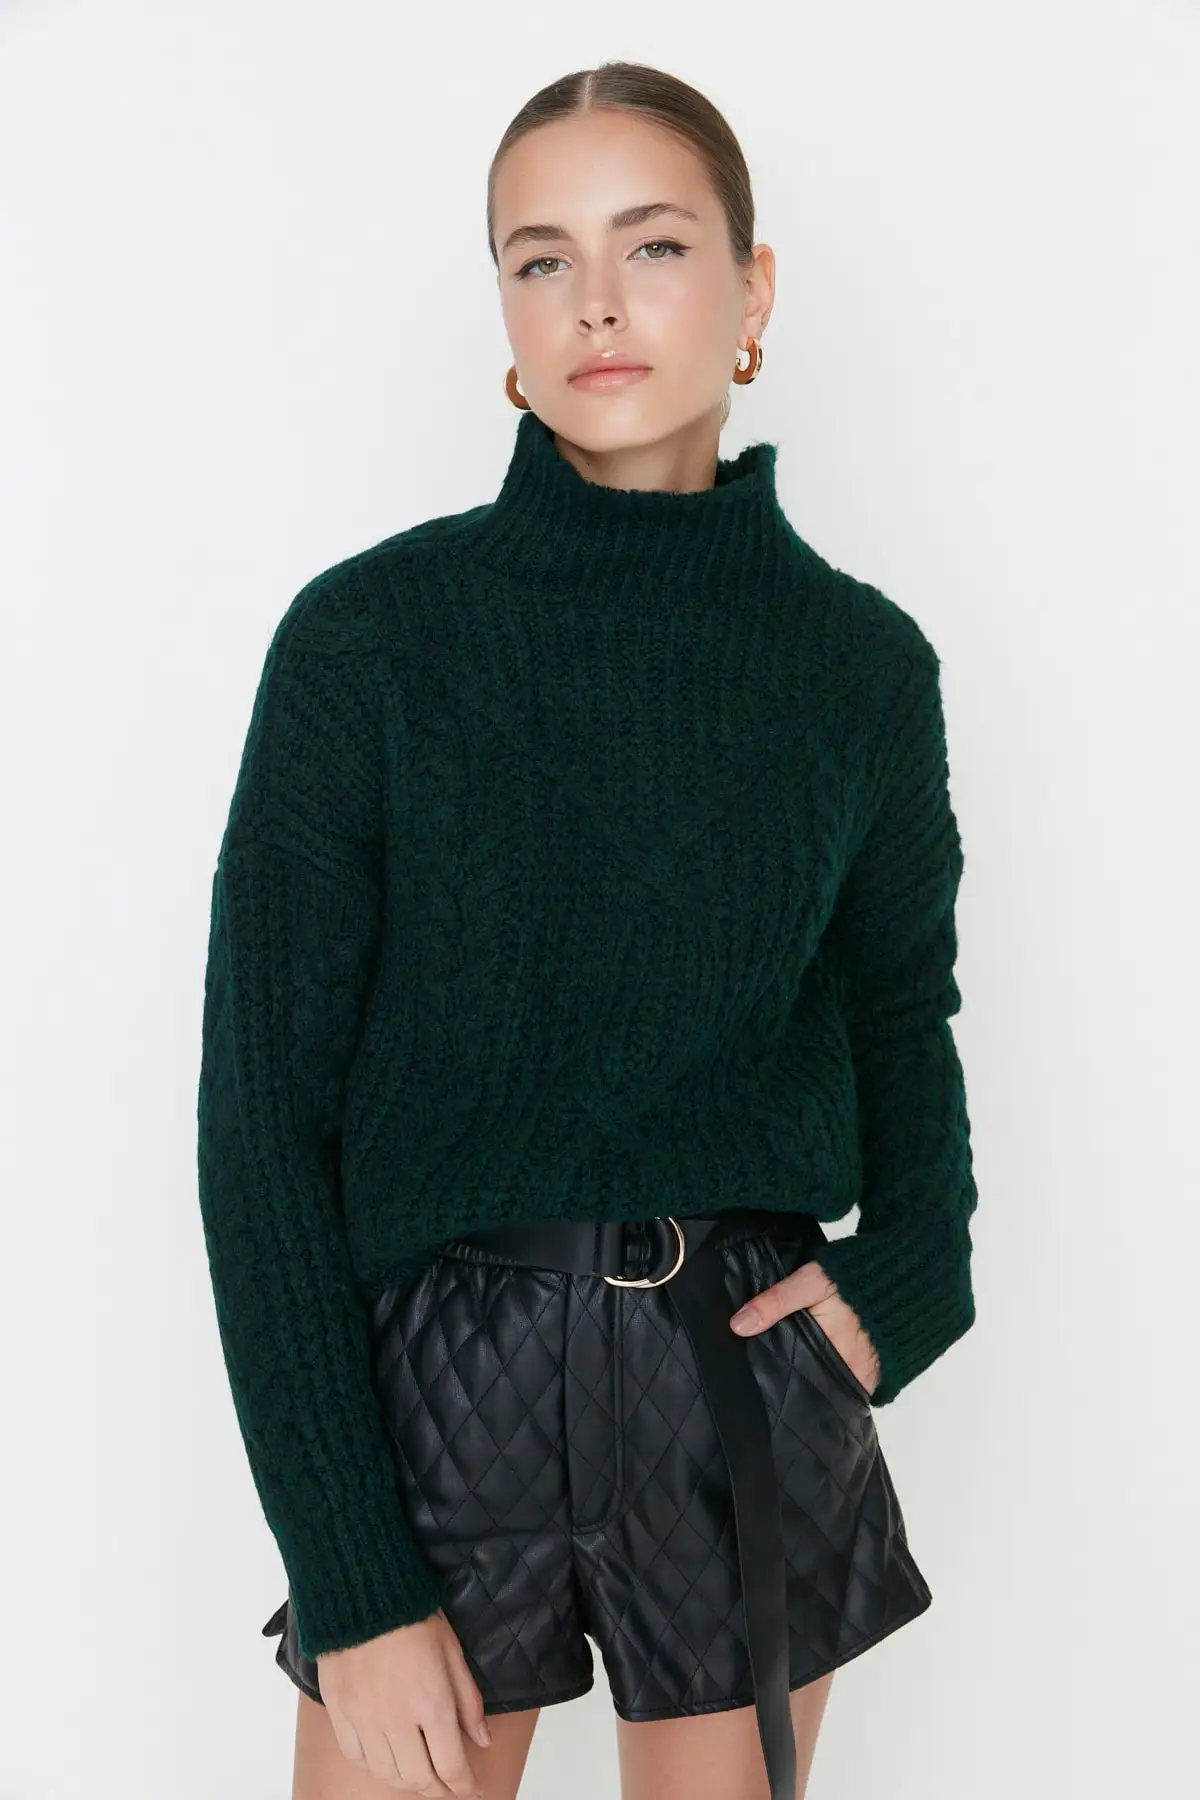 Women's Sweater Top Emerald green knitting detailed upright collar knitwear sweater